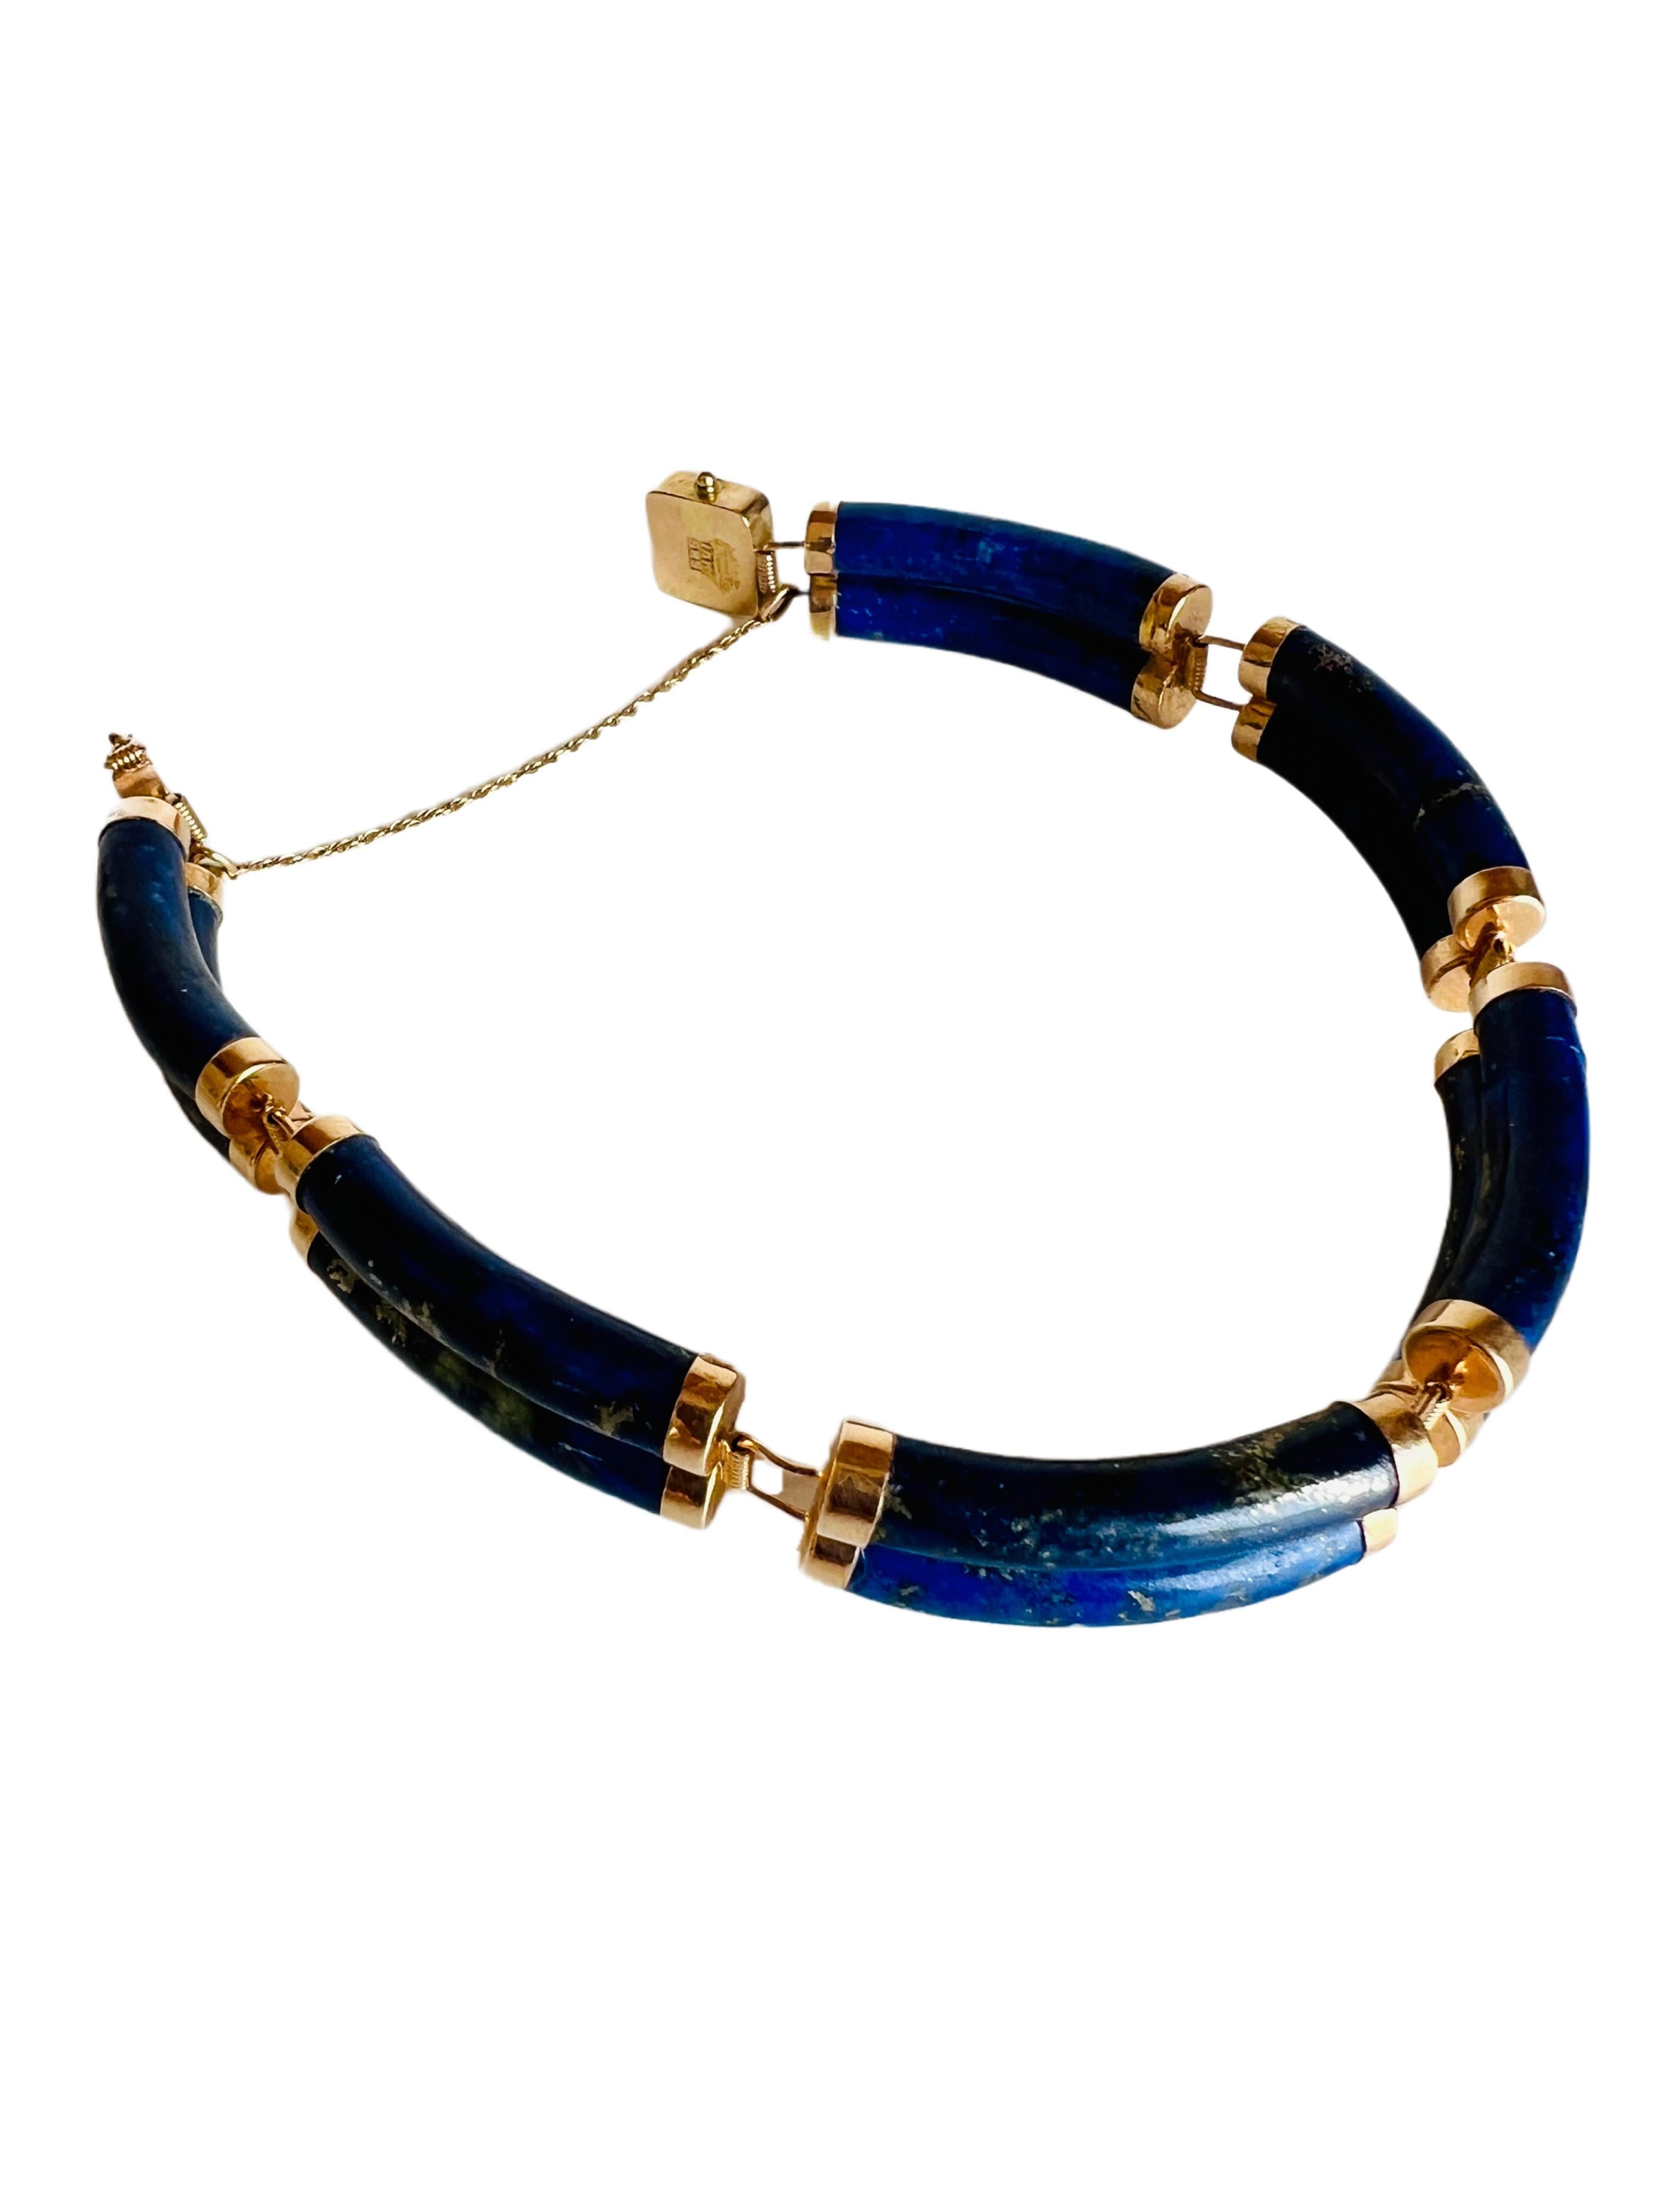 Art Deco Vintage 14k Lapis Lazuli Two Bar Link Station Bracelet Chinese Good Luck Fortune For Sale